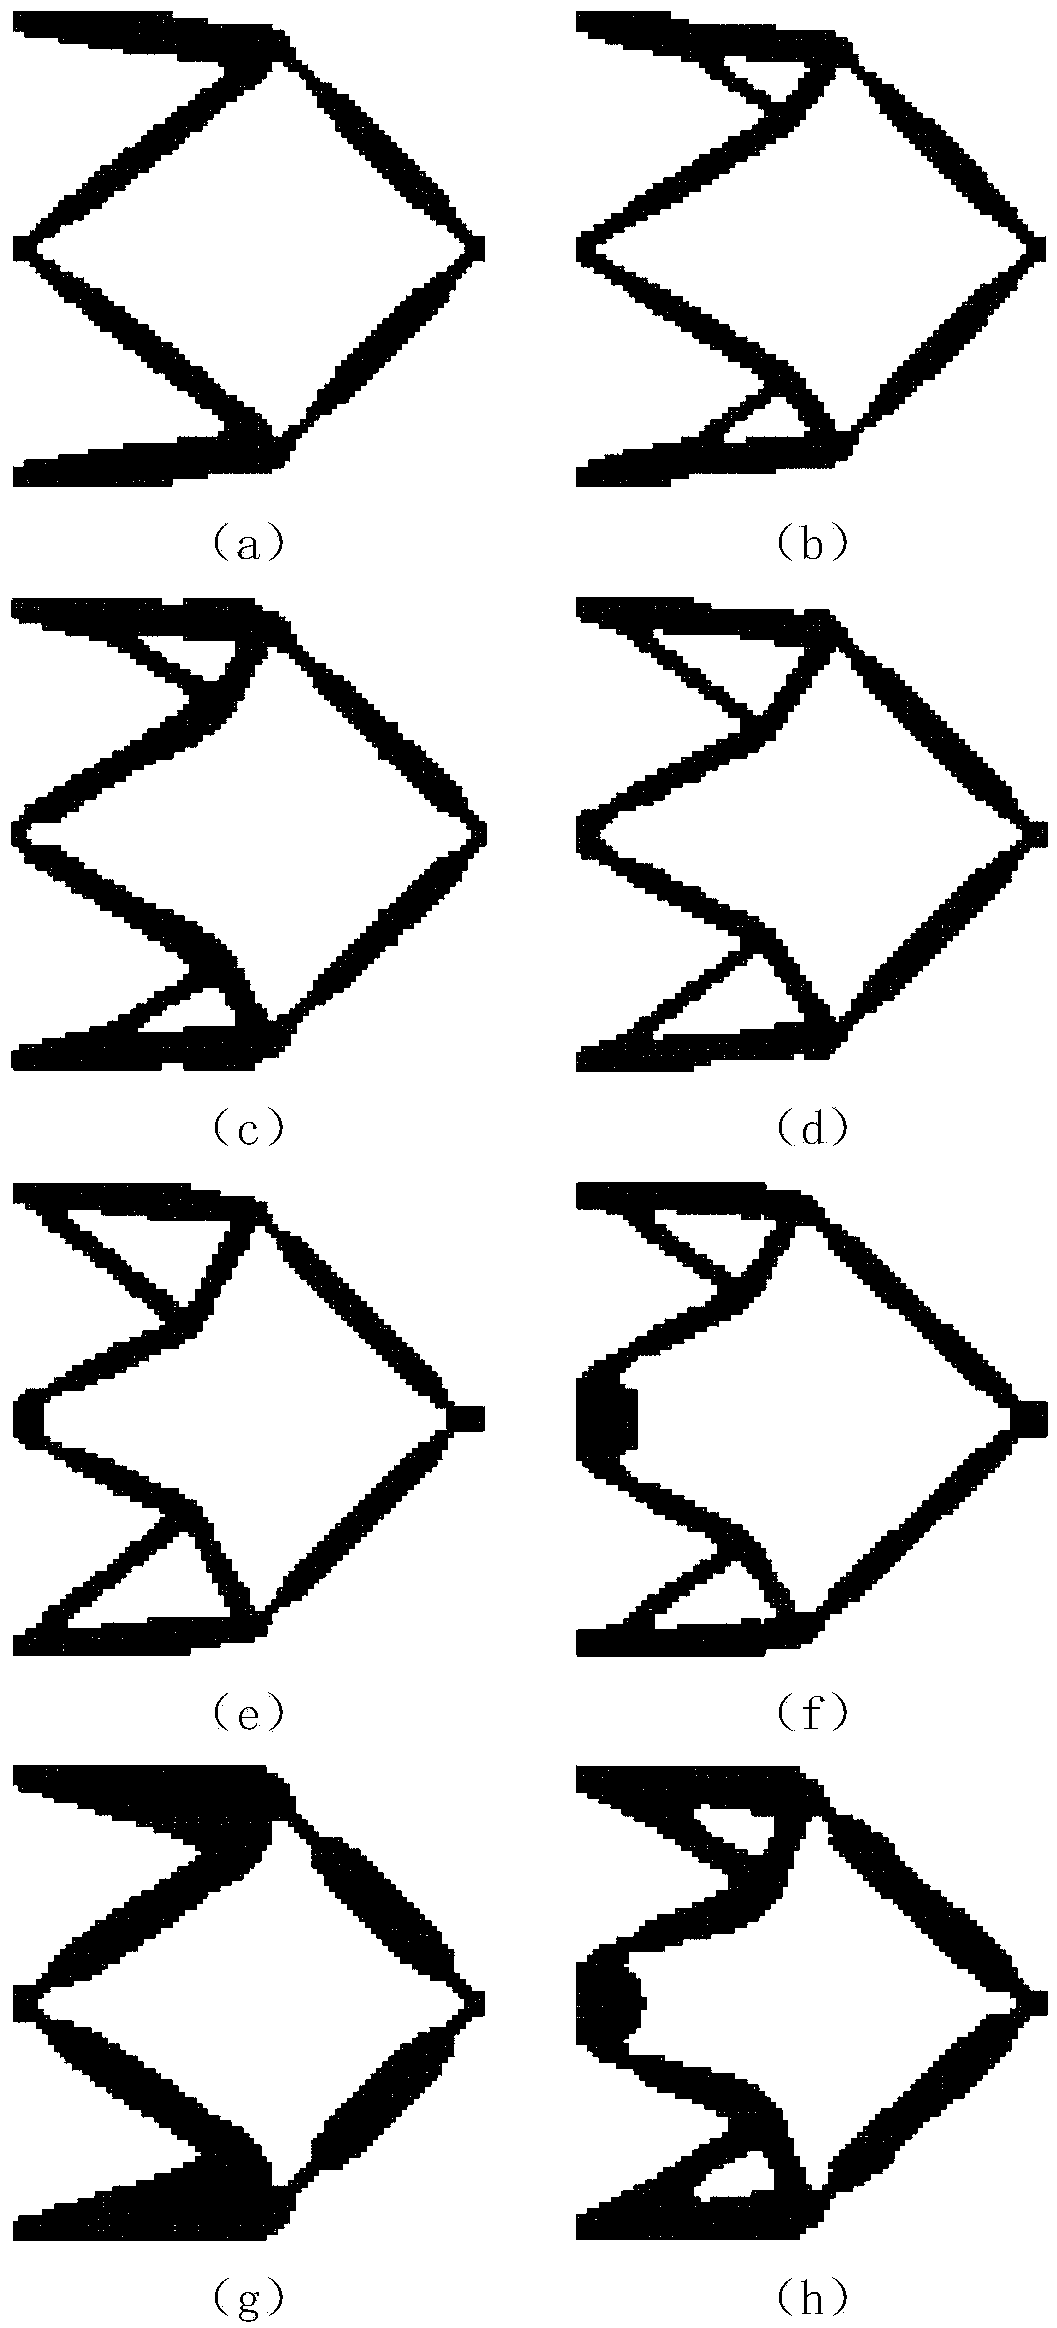 A flexible mechanism topology optimization design method based on adaptive constraint